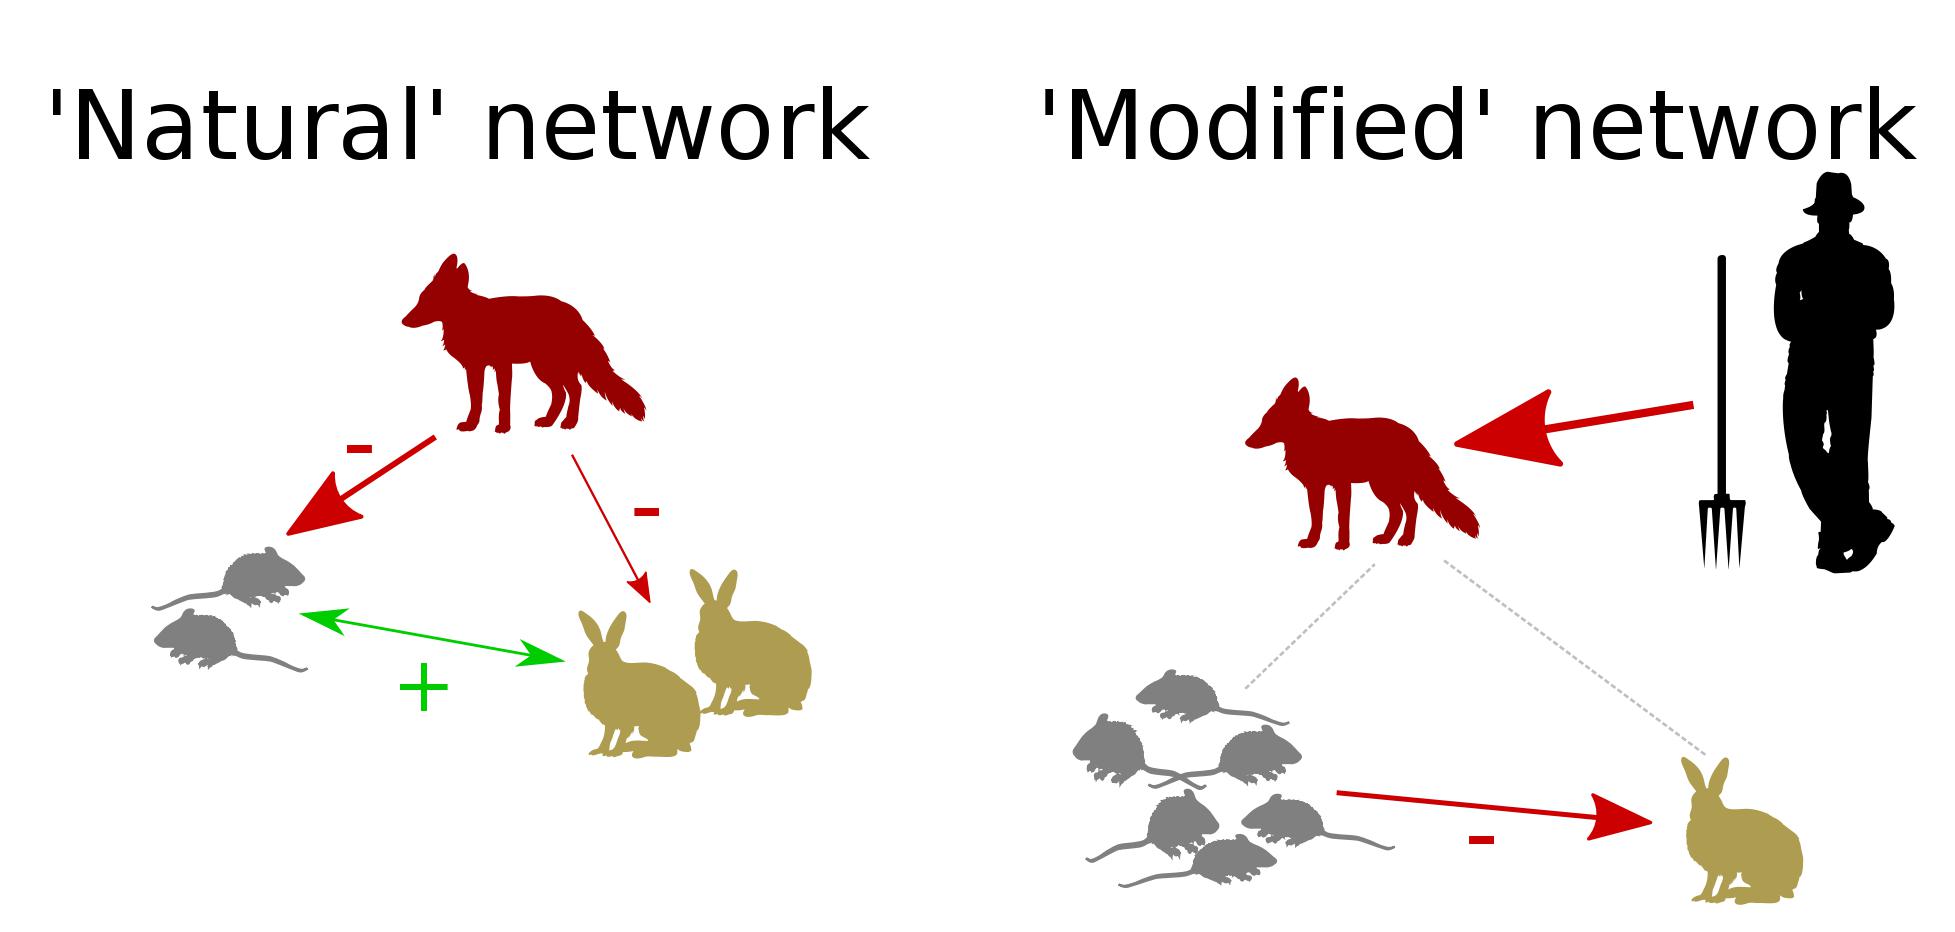 Network plan, natural vs modified